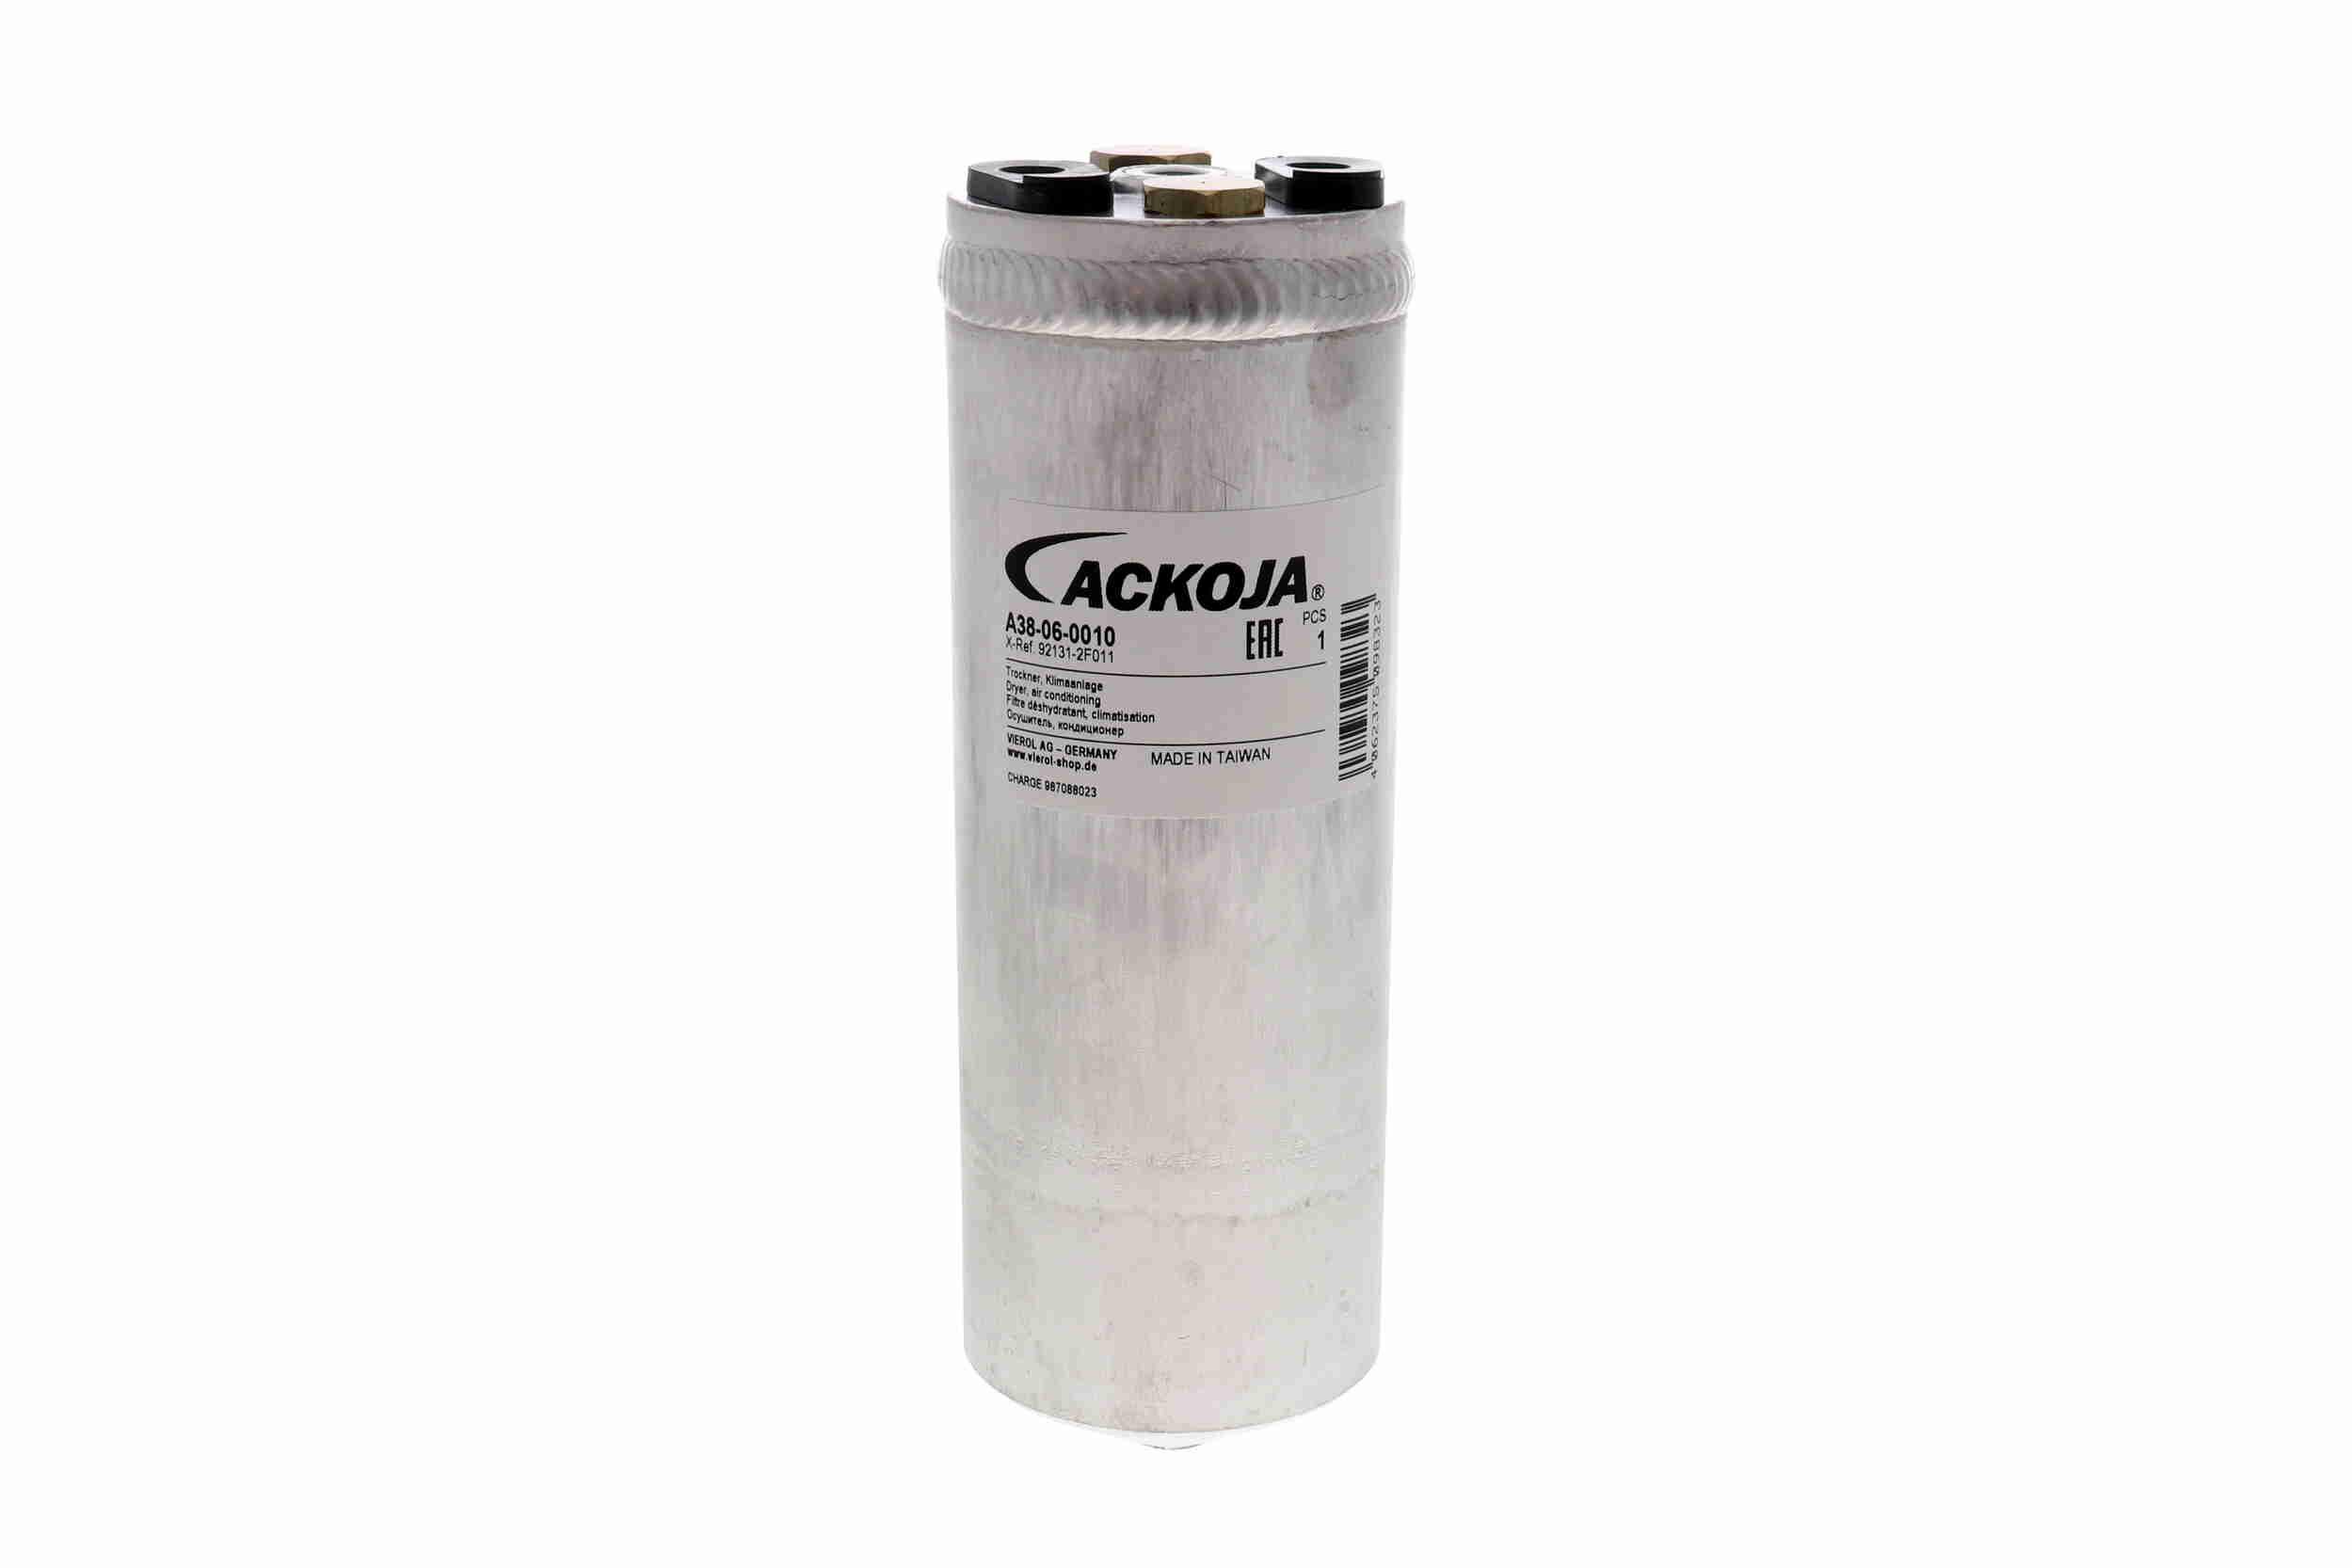 Ackoja Airco droger/filter A38-06-0010